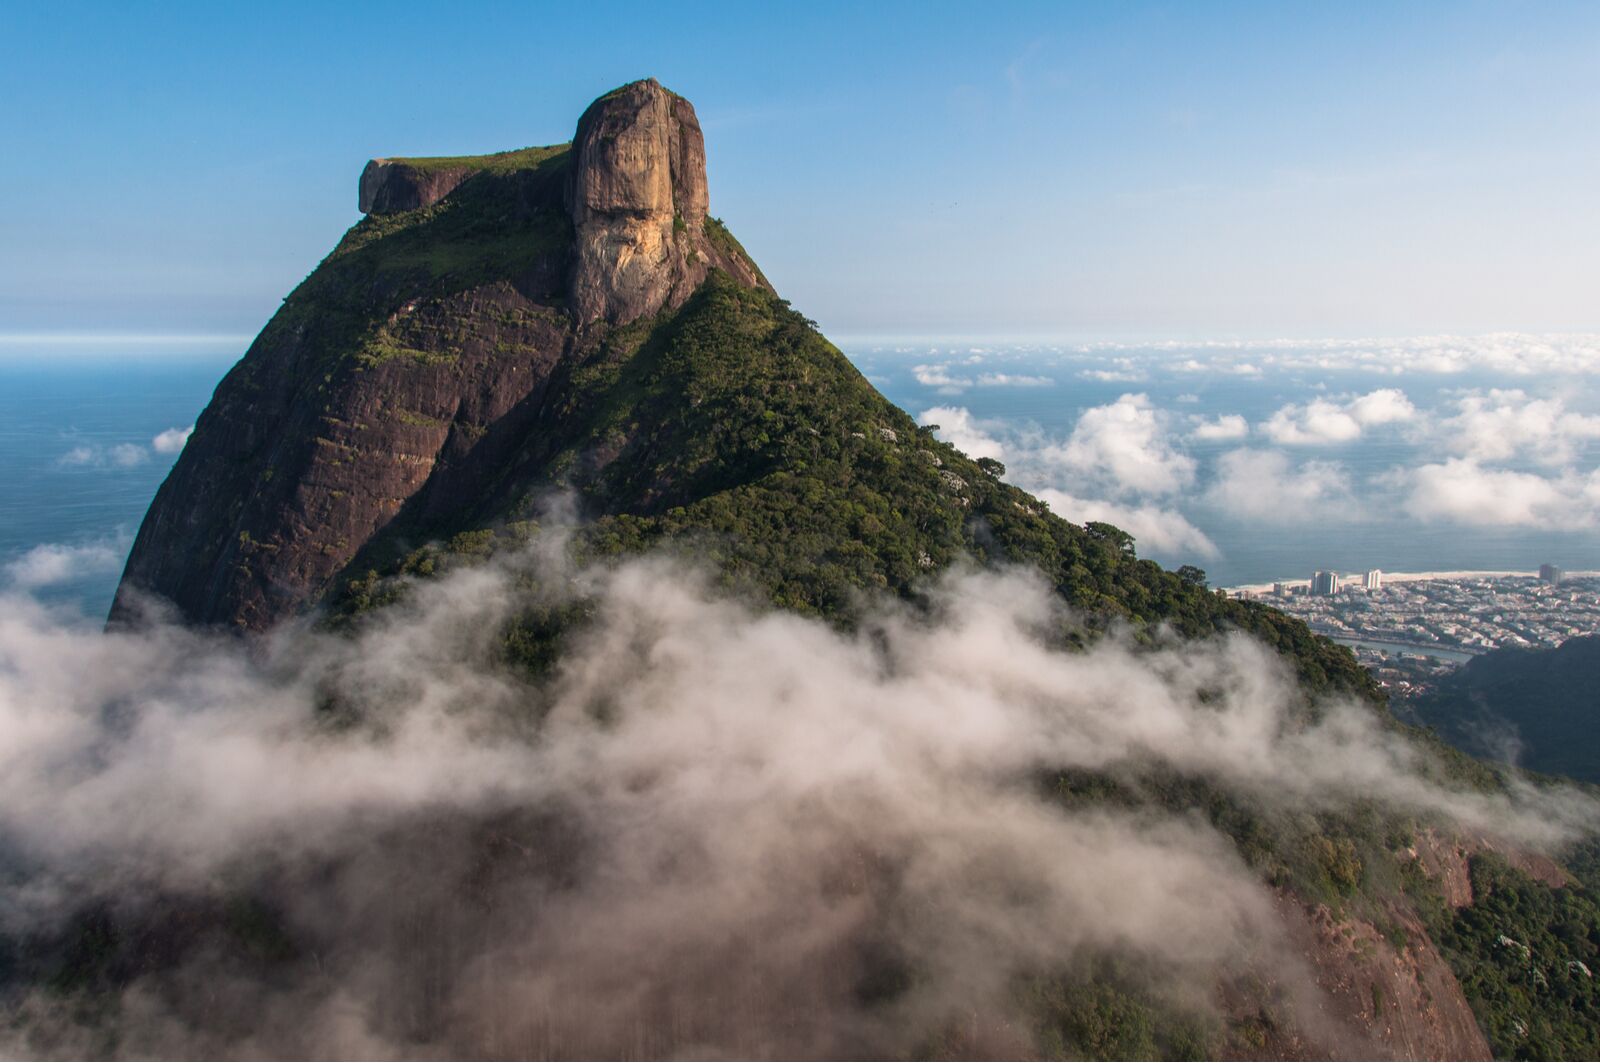 Pedra da Gavea Mountain Peak, Famous Rock Formation in Rio de Janeiro, Brazil